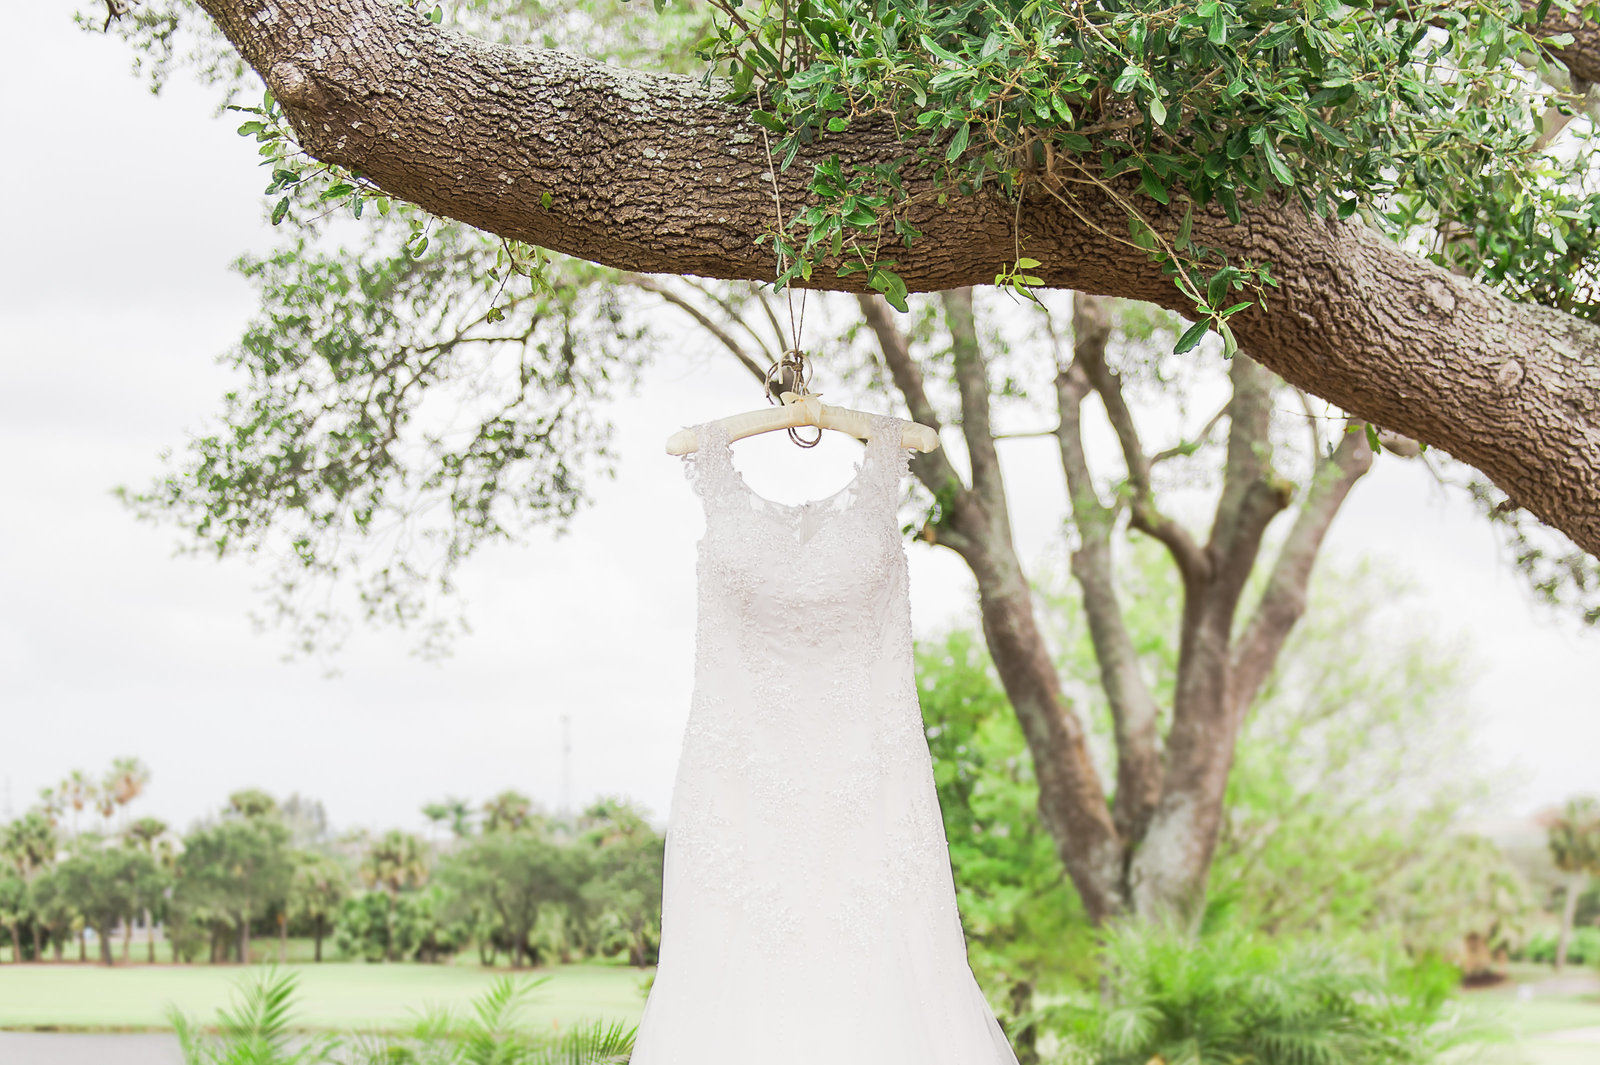 Rustic Wedding Gown - Myacoo Country Club Wedding - Palm Beach Wedding Photography by Palm Beach Photography, Inc.